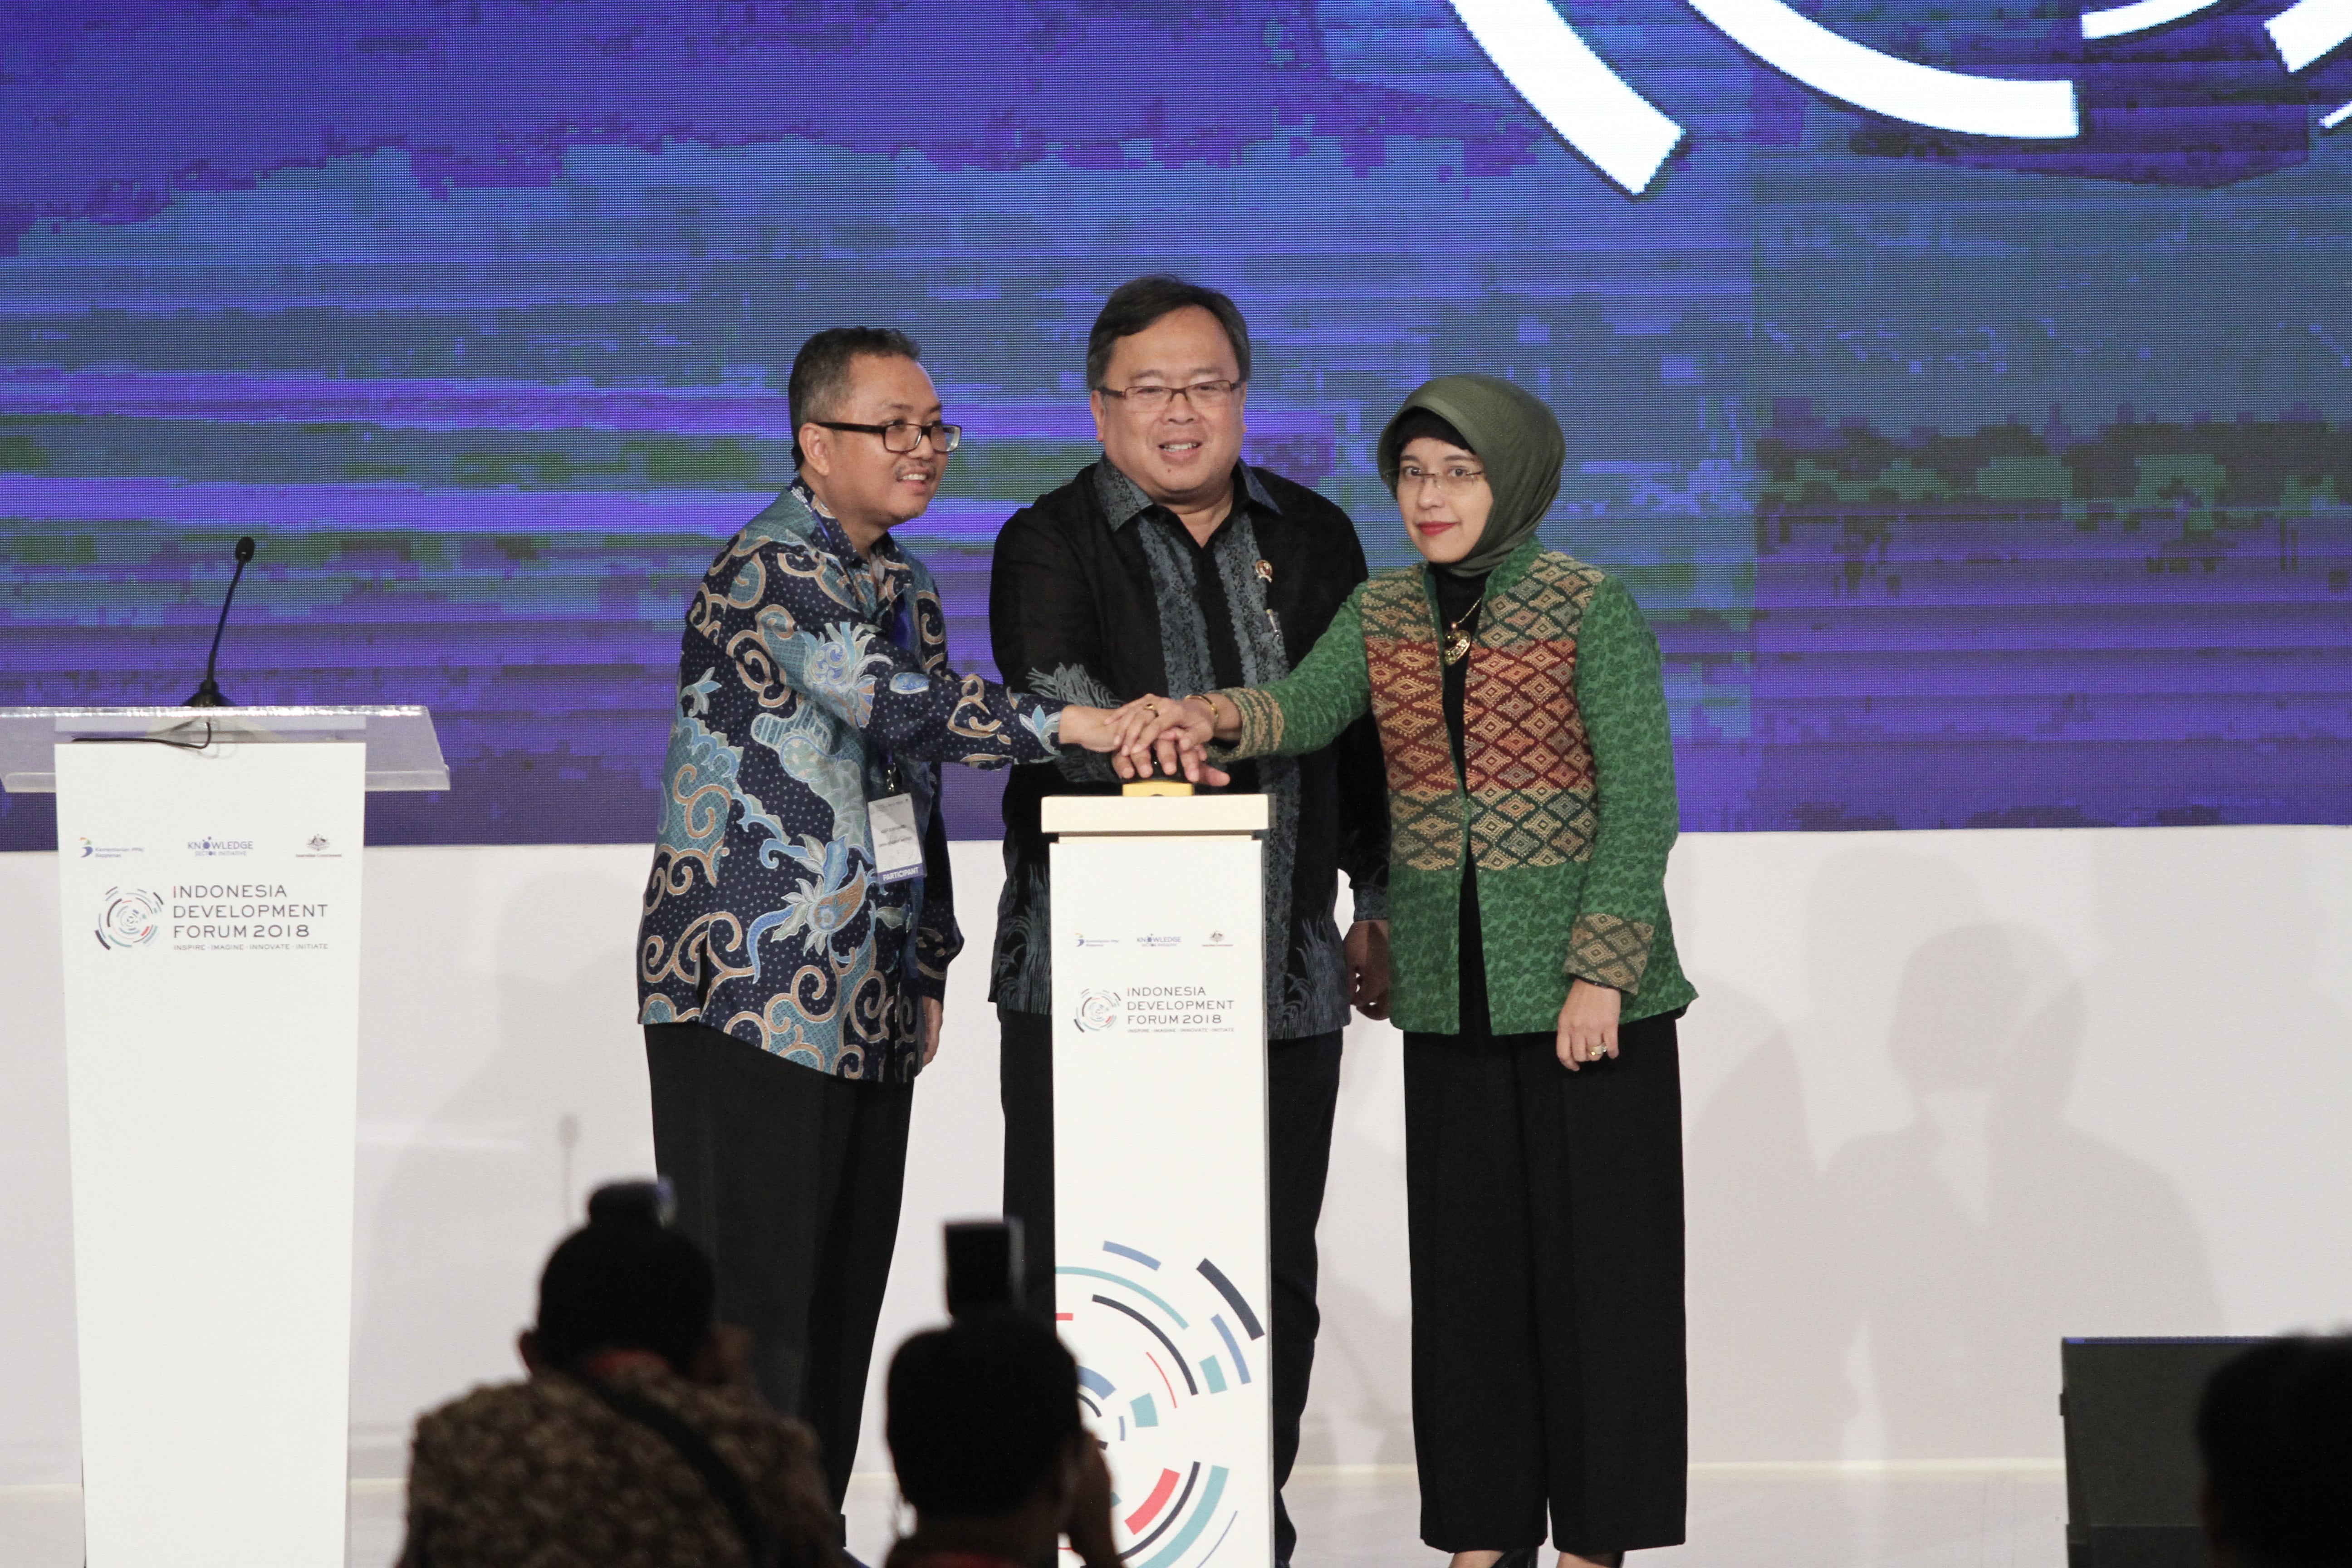 Penutupan Indonesia Development Forum 2018